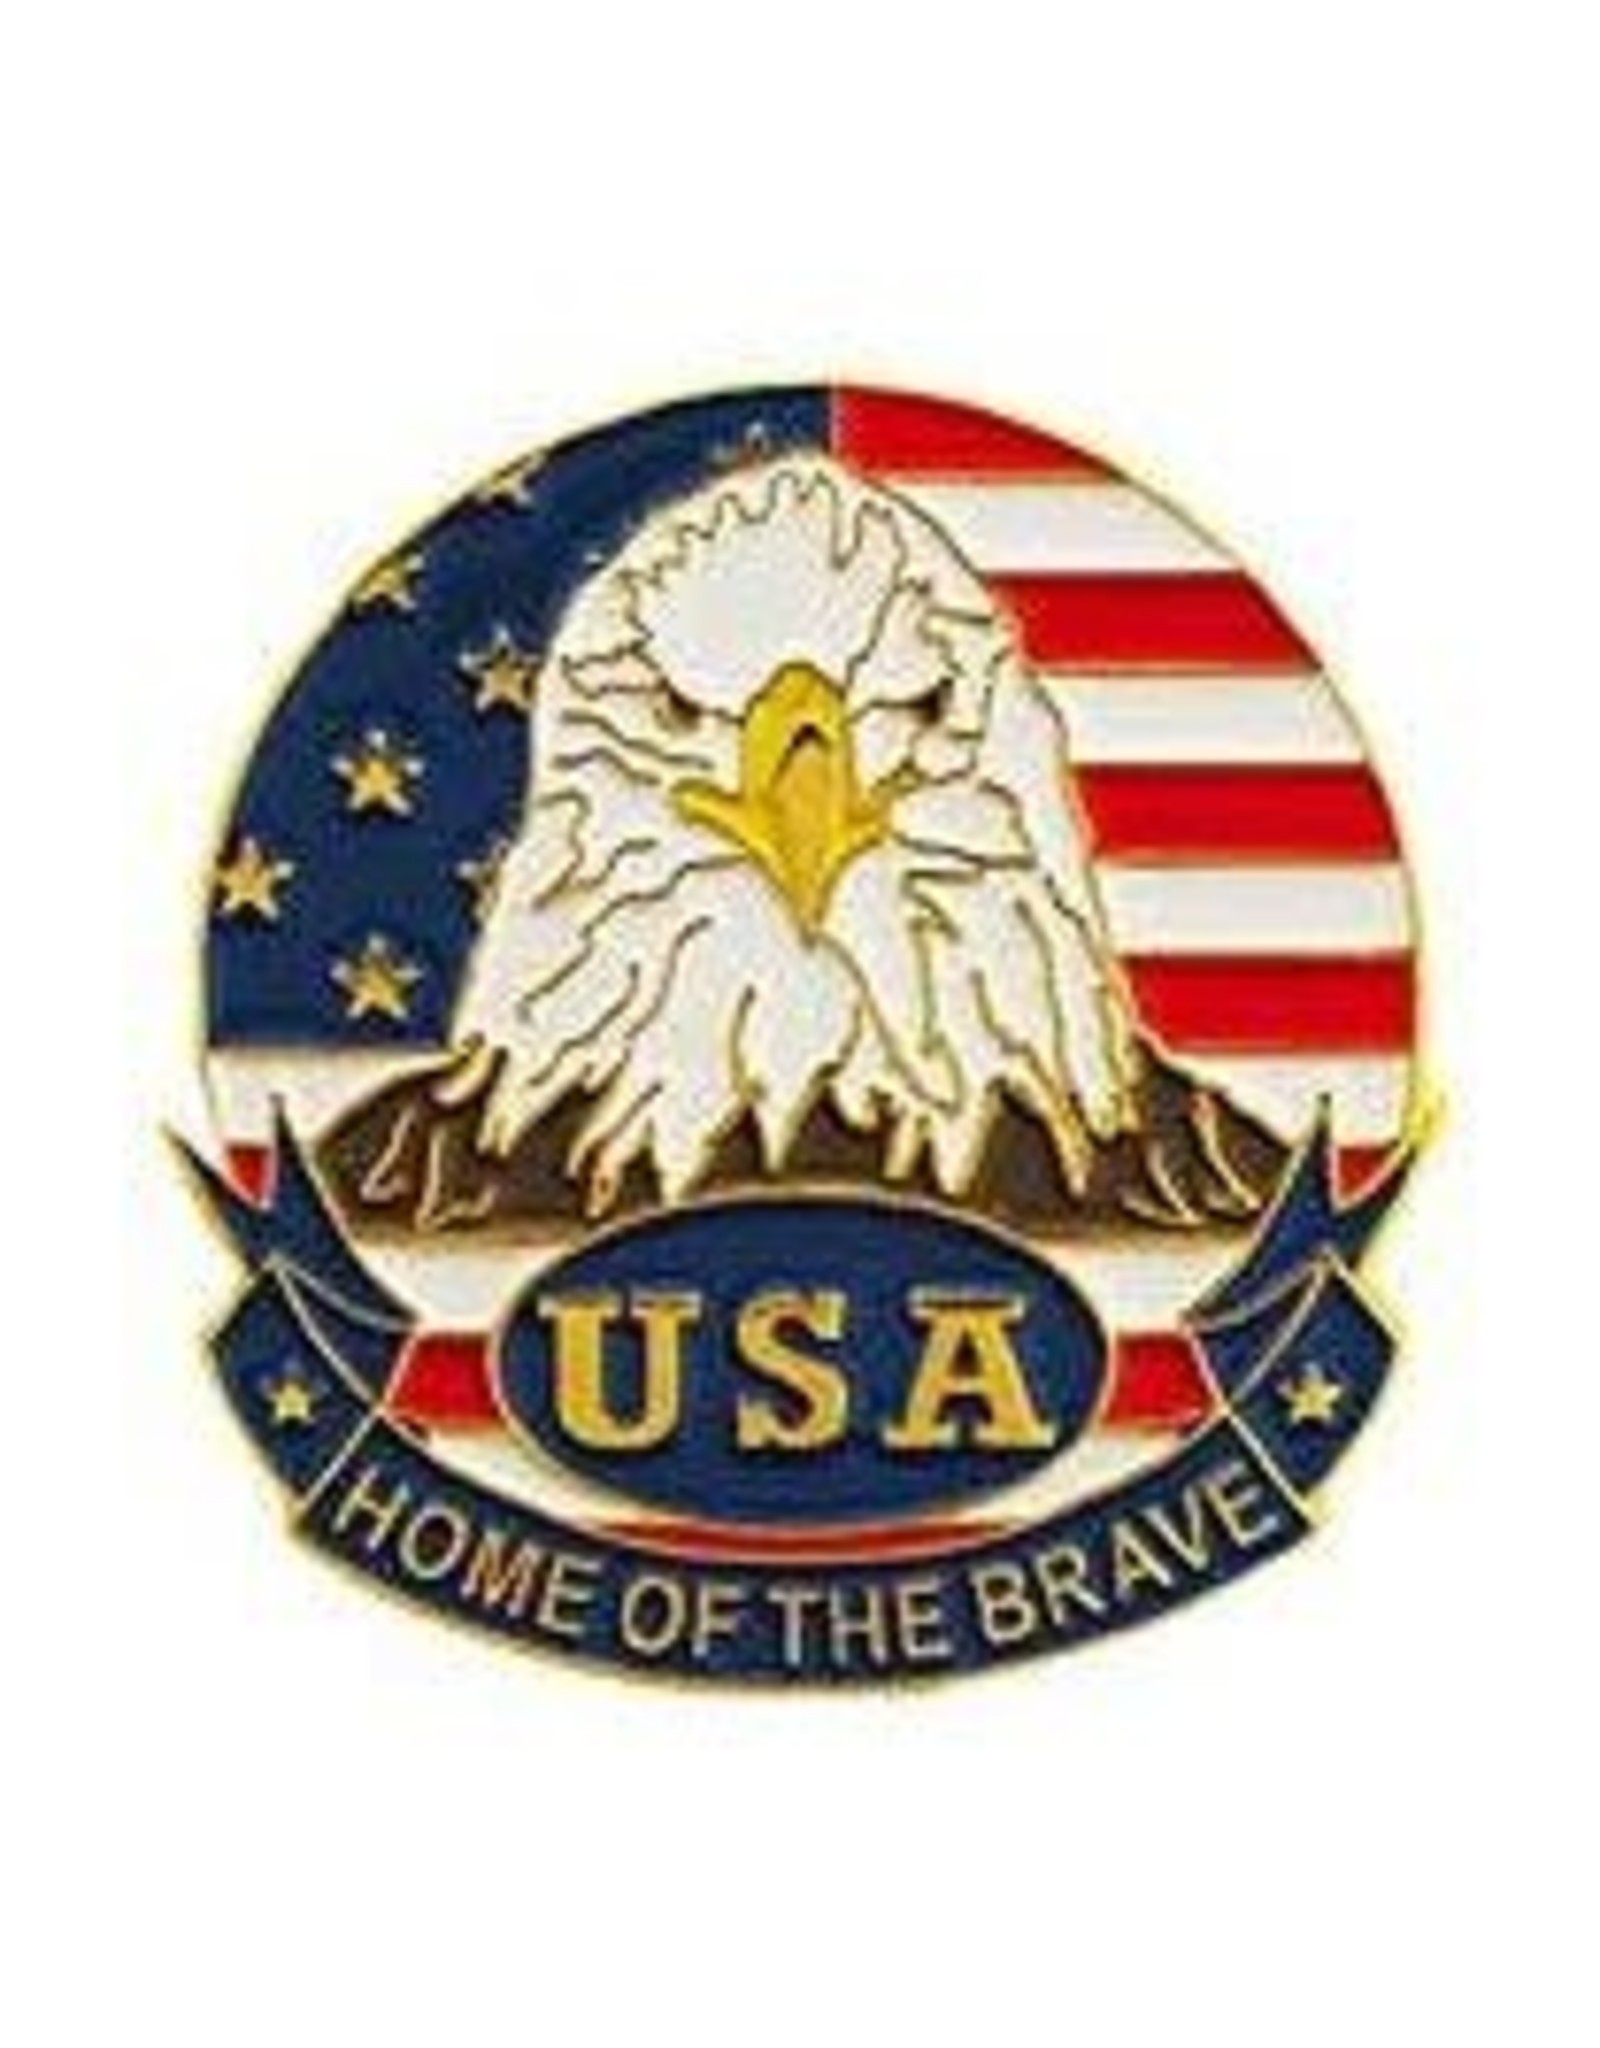 Pin - USA Flag Eagle Circle